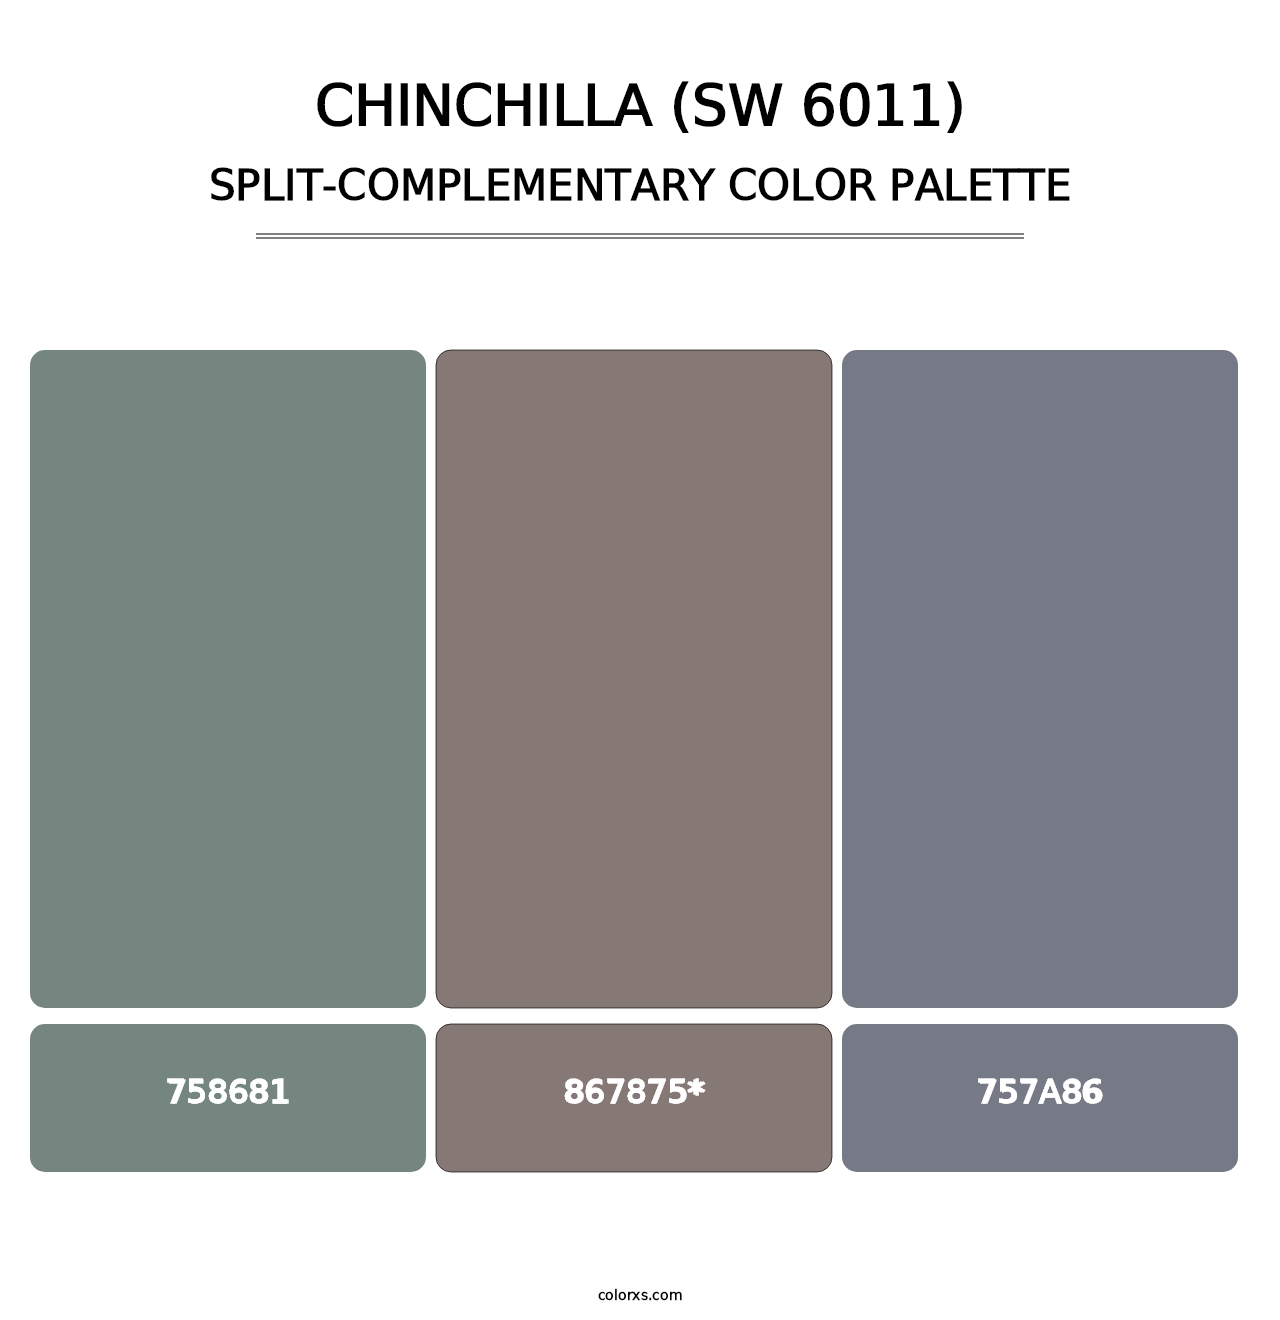 Chinchilla (SW 6011) - Split-Complementary Color Palette